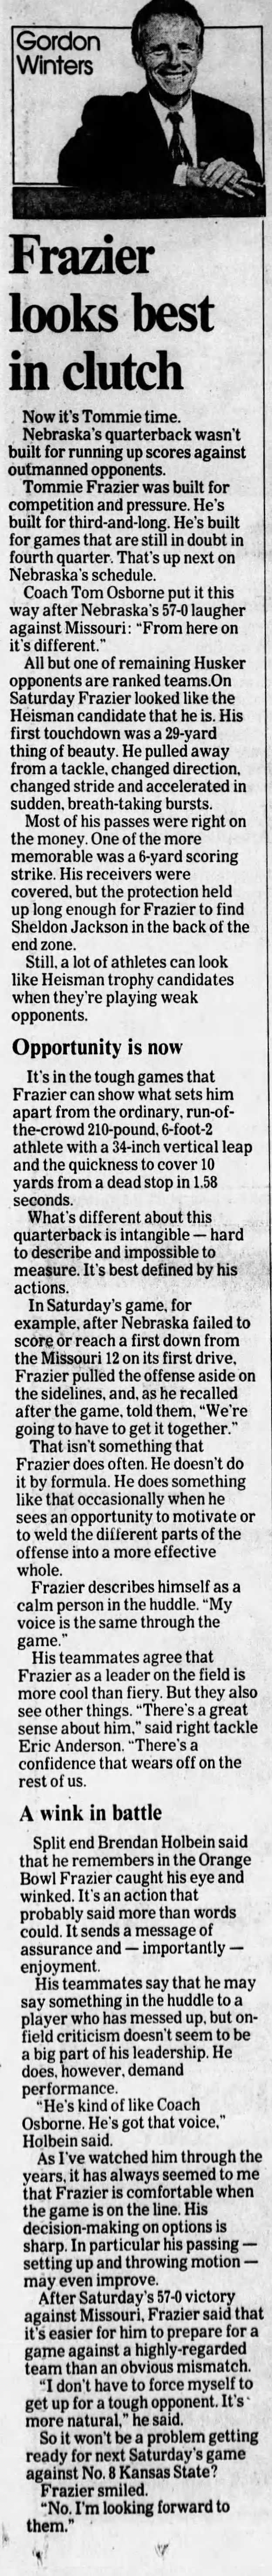 1995 Nebraska-Missouri, Winters column